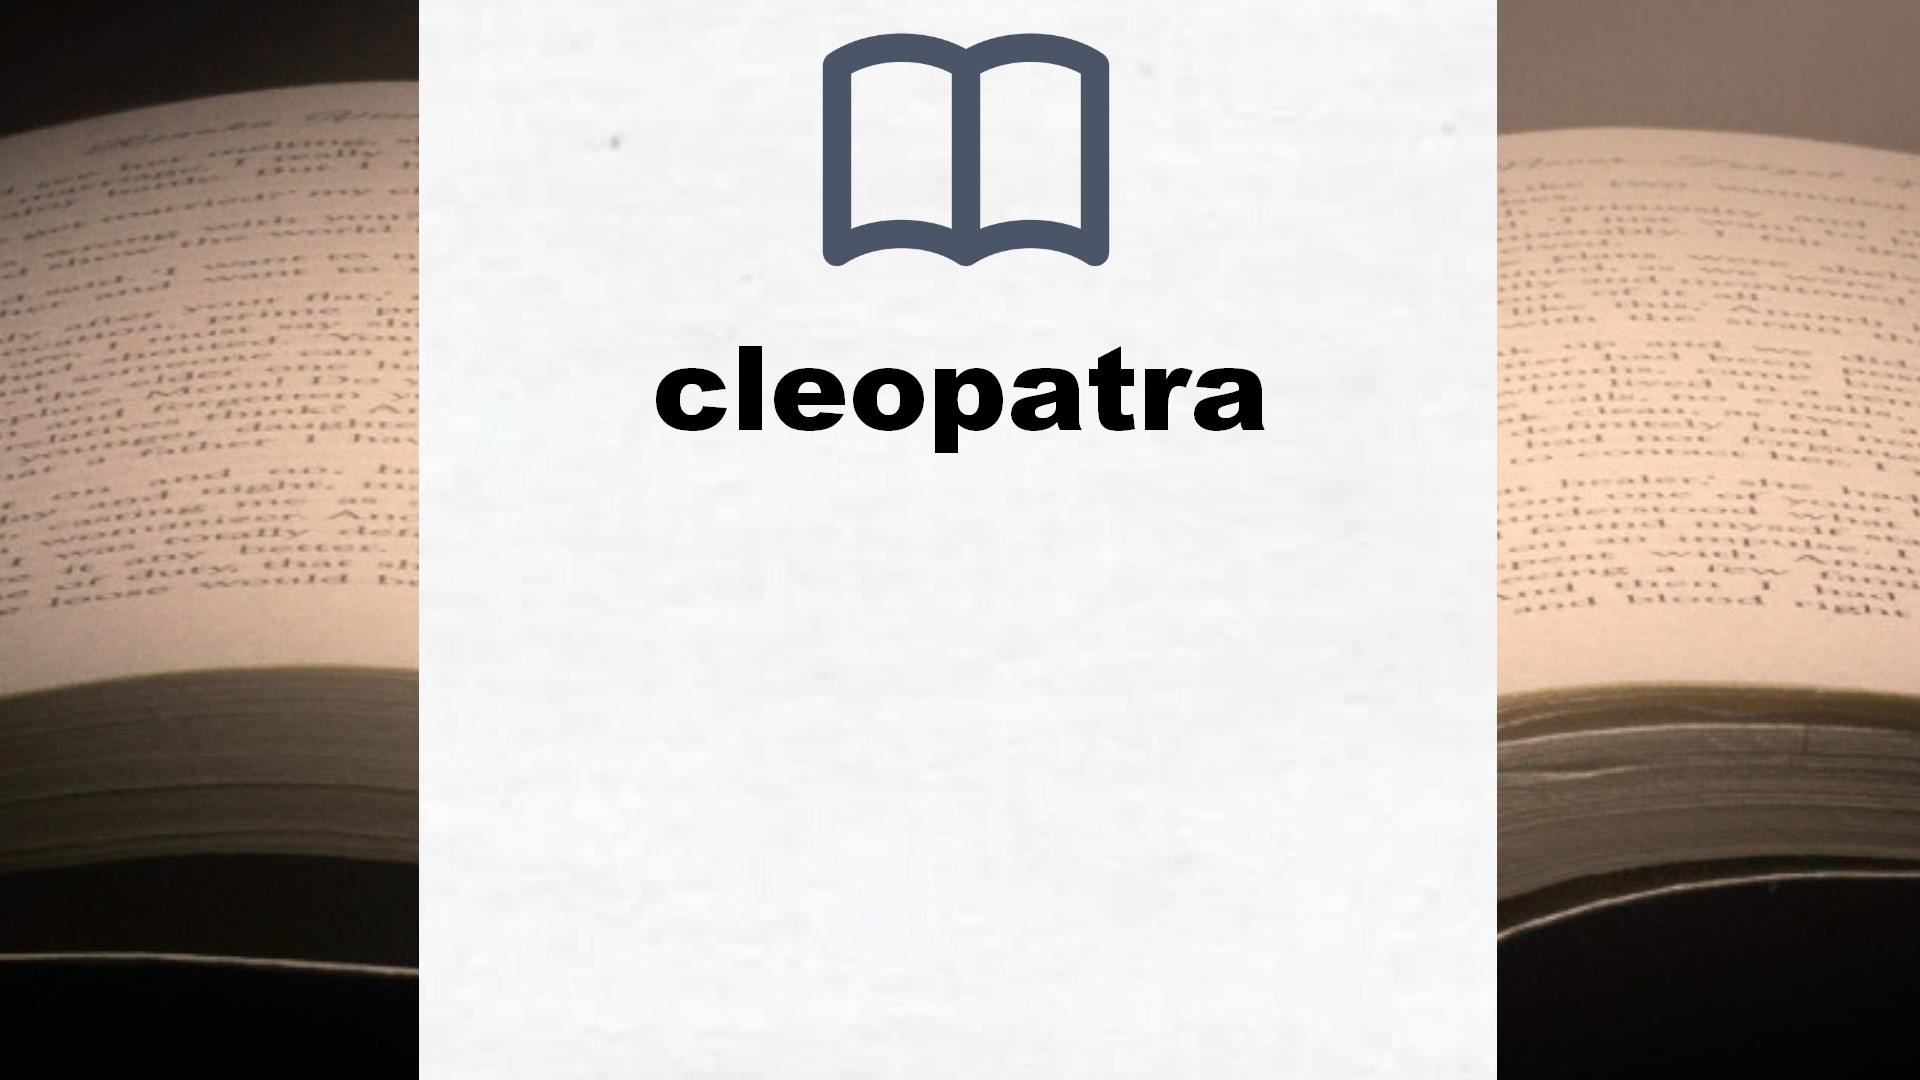 Libros sobre cleopatra